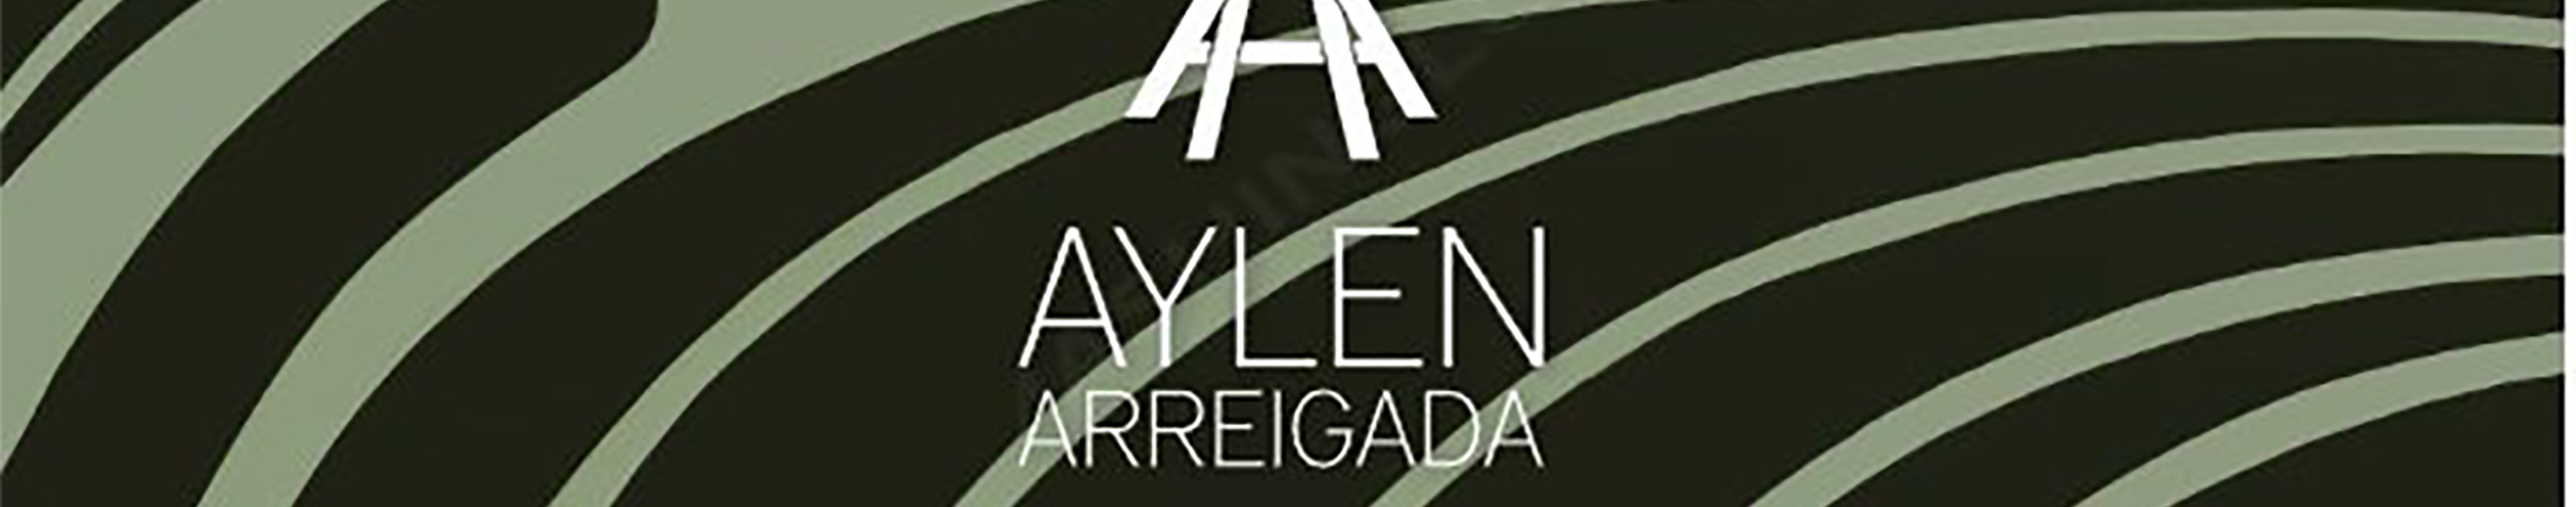 Aylen Sofia Arreigada's profile banner